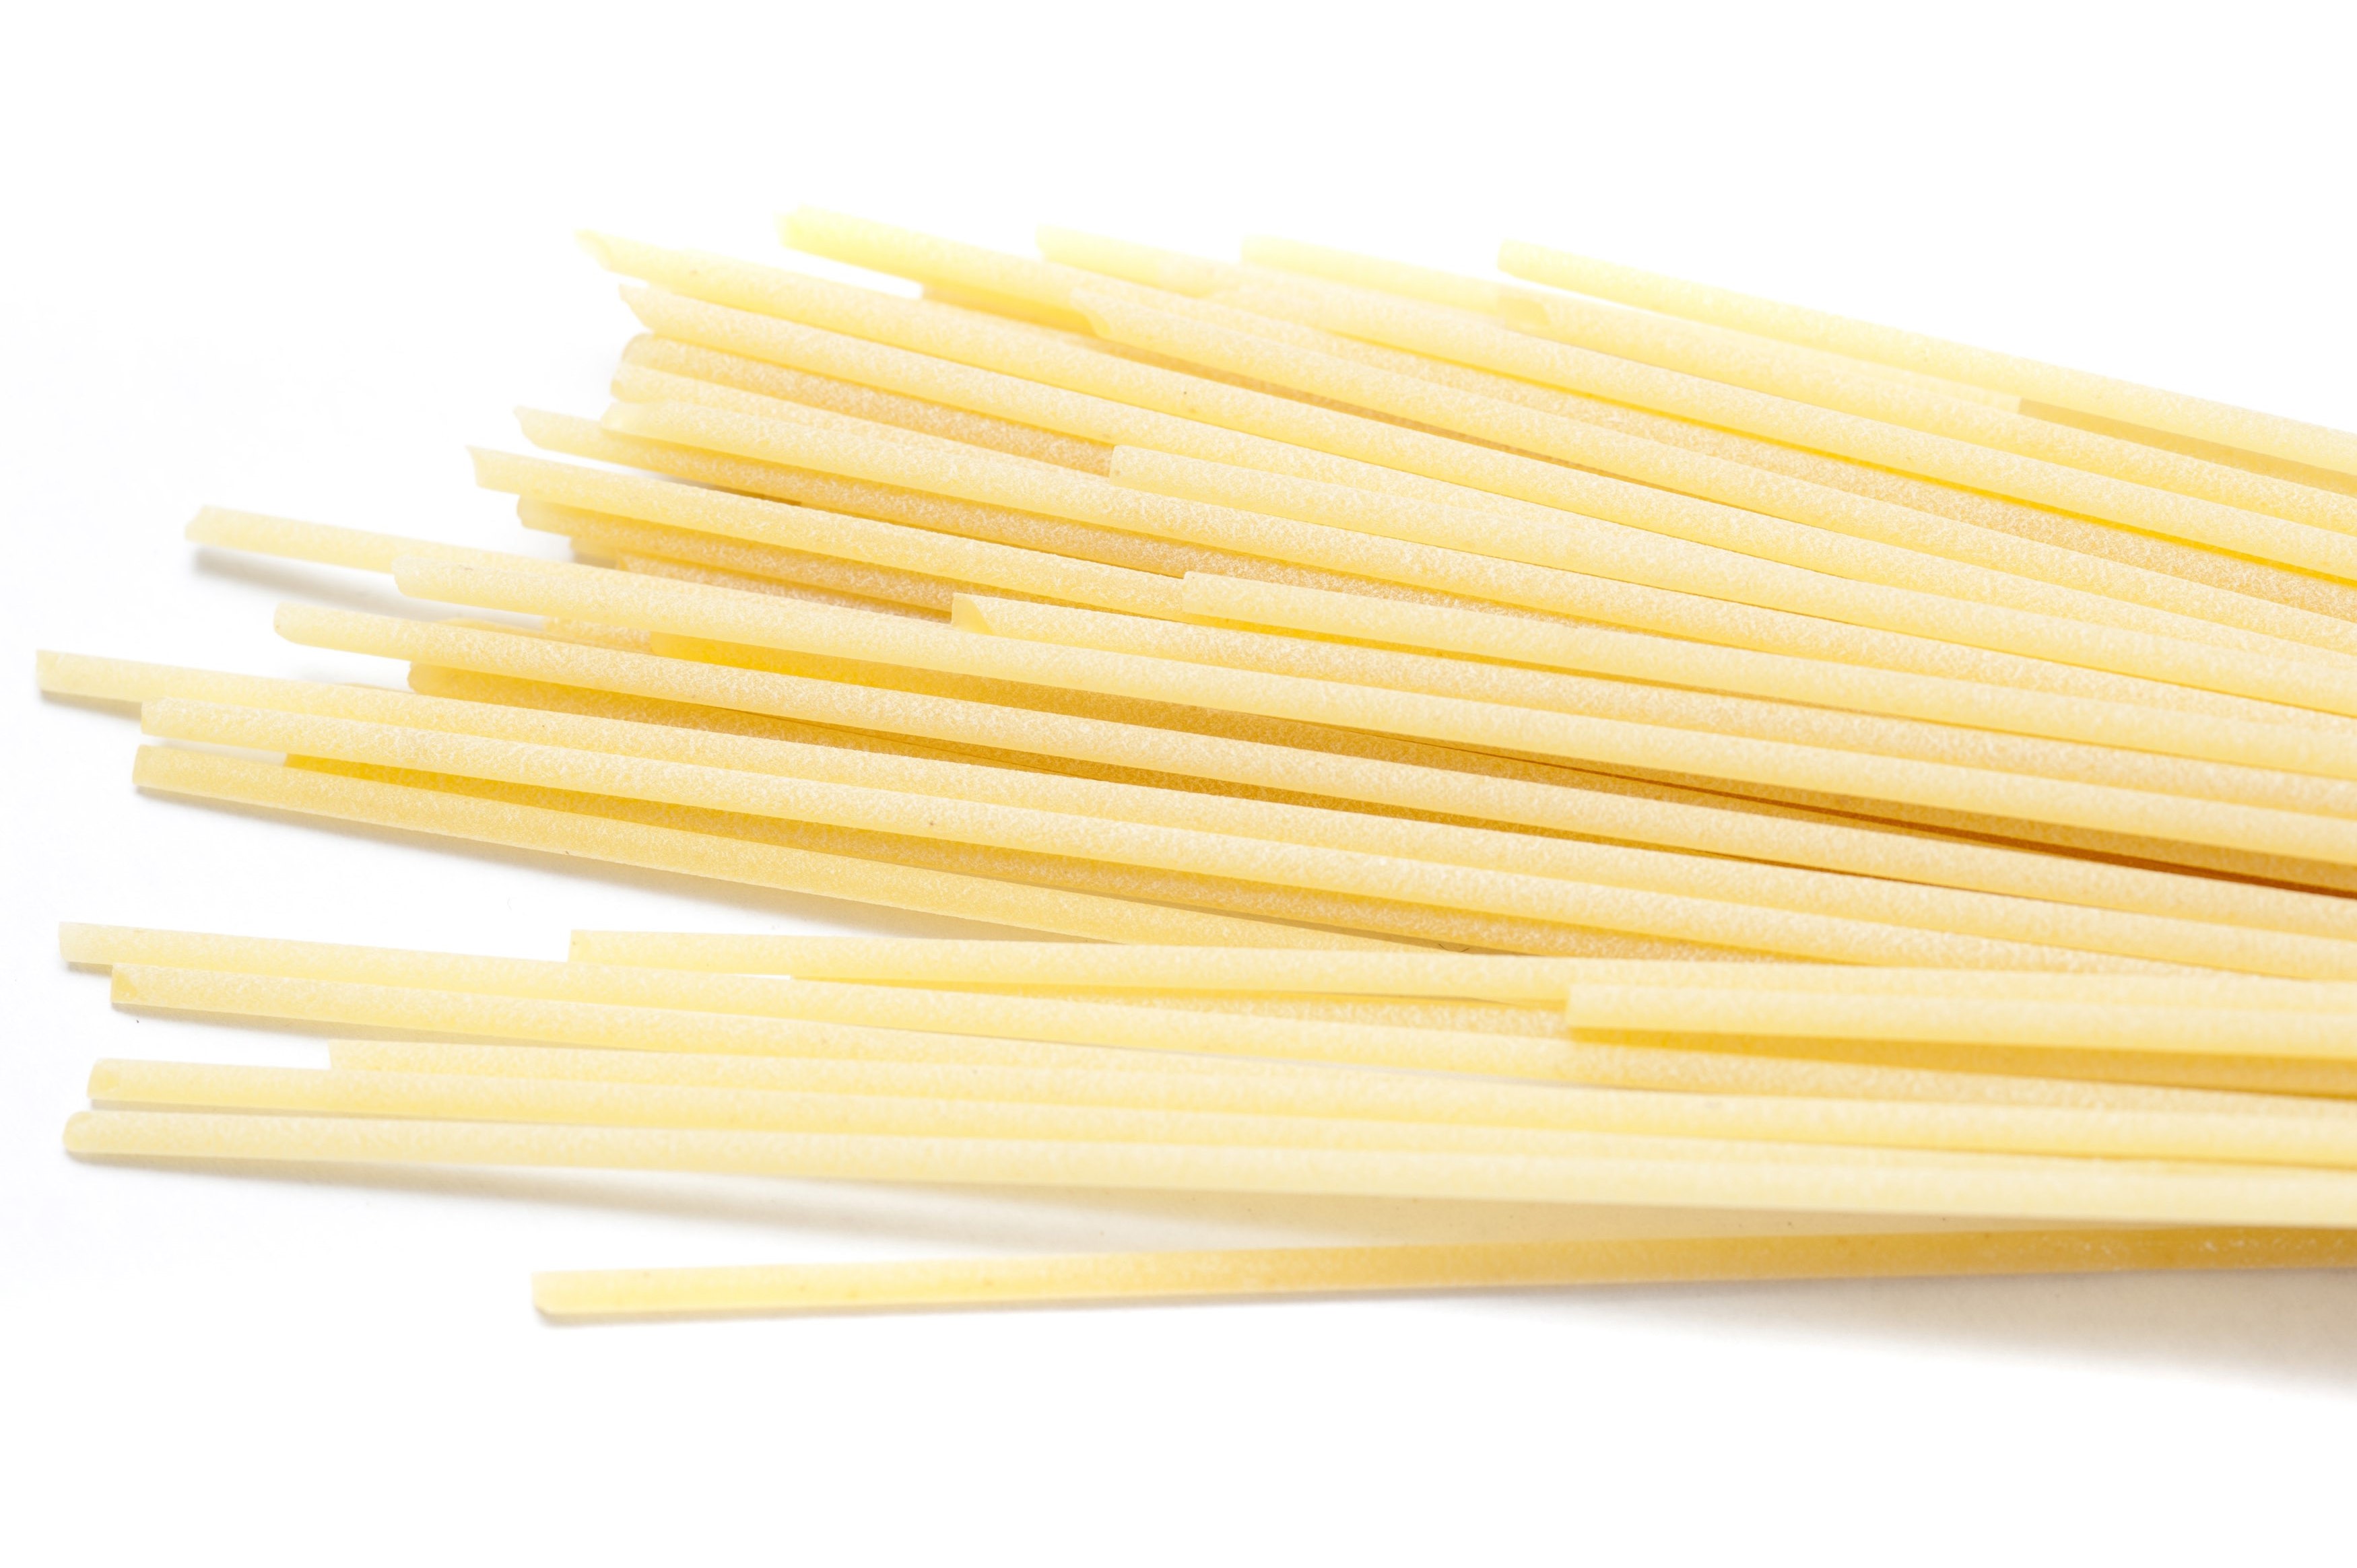 Uncooked Italian spaghetti pasta - Free Stock Image